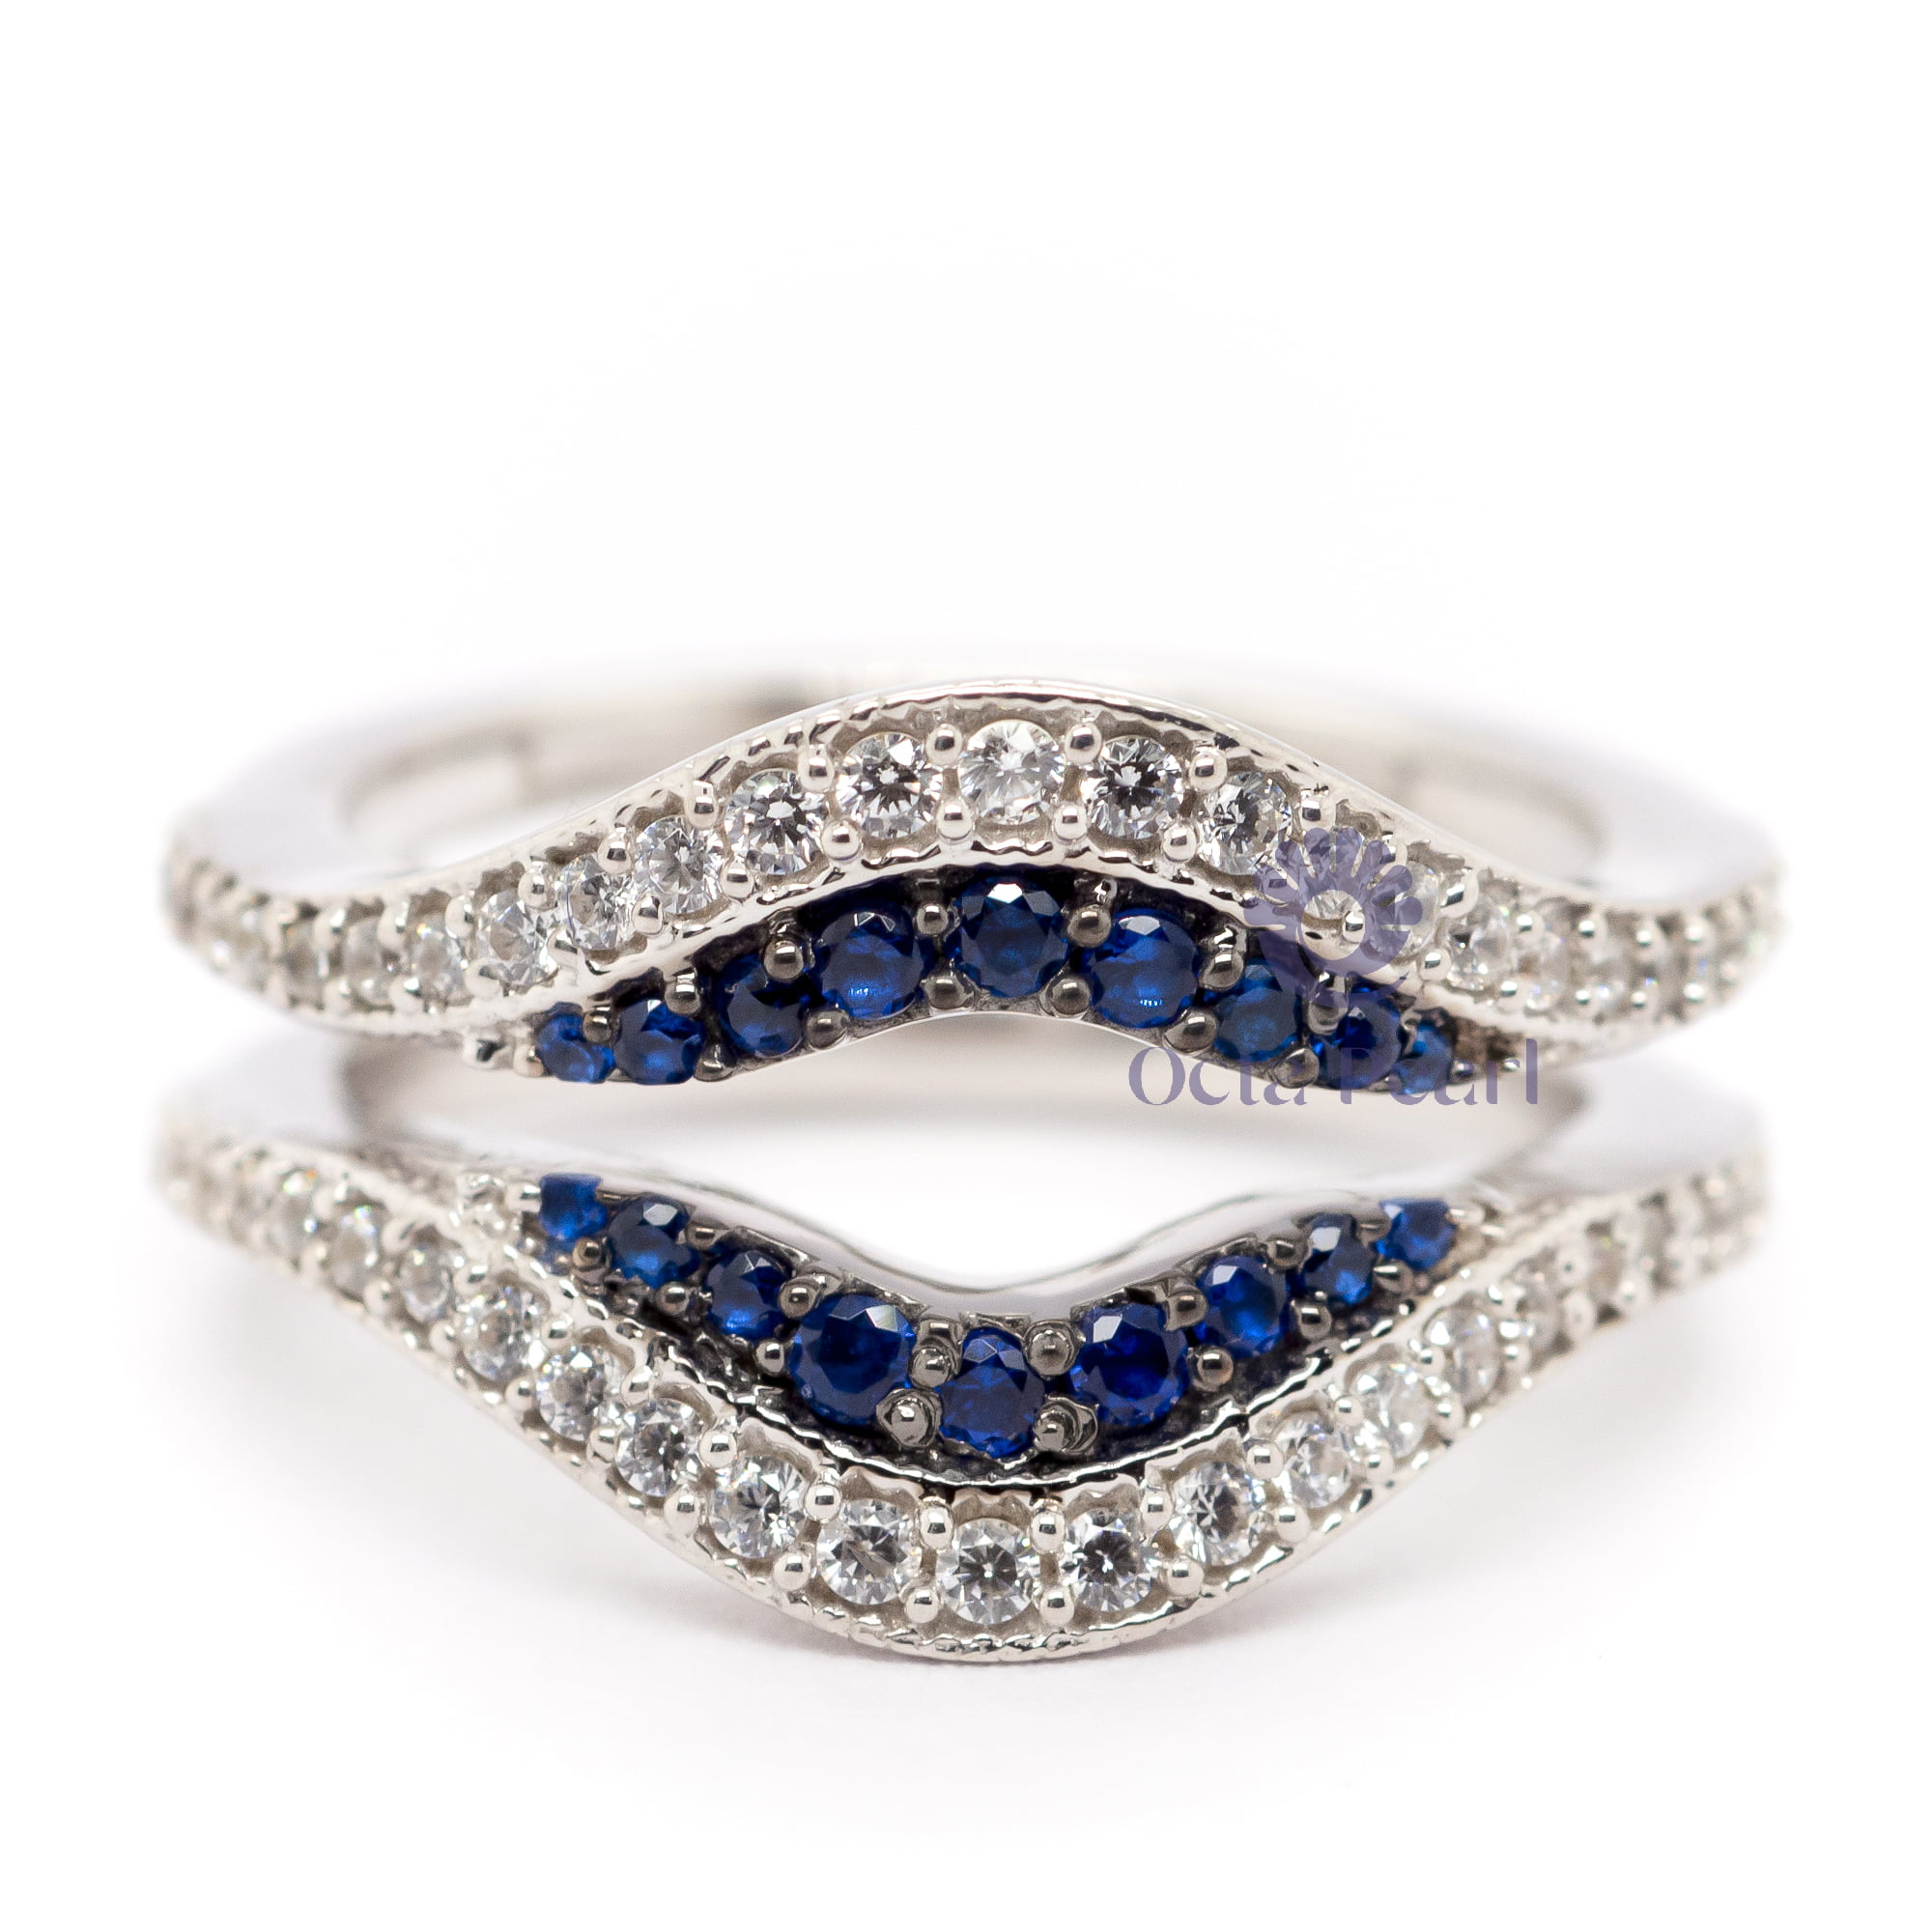 Blue sapphire & White Round CZ Stone Enhancer Guard Wedding Band Ring